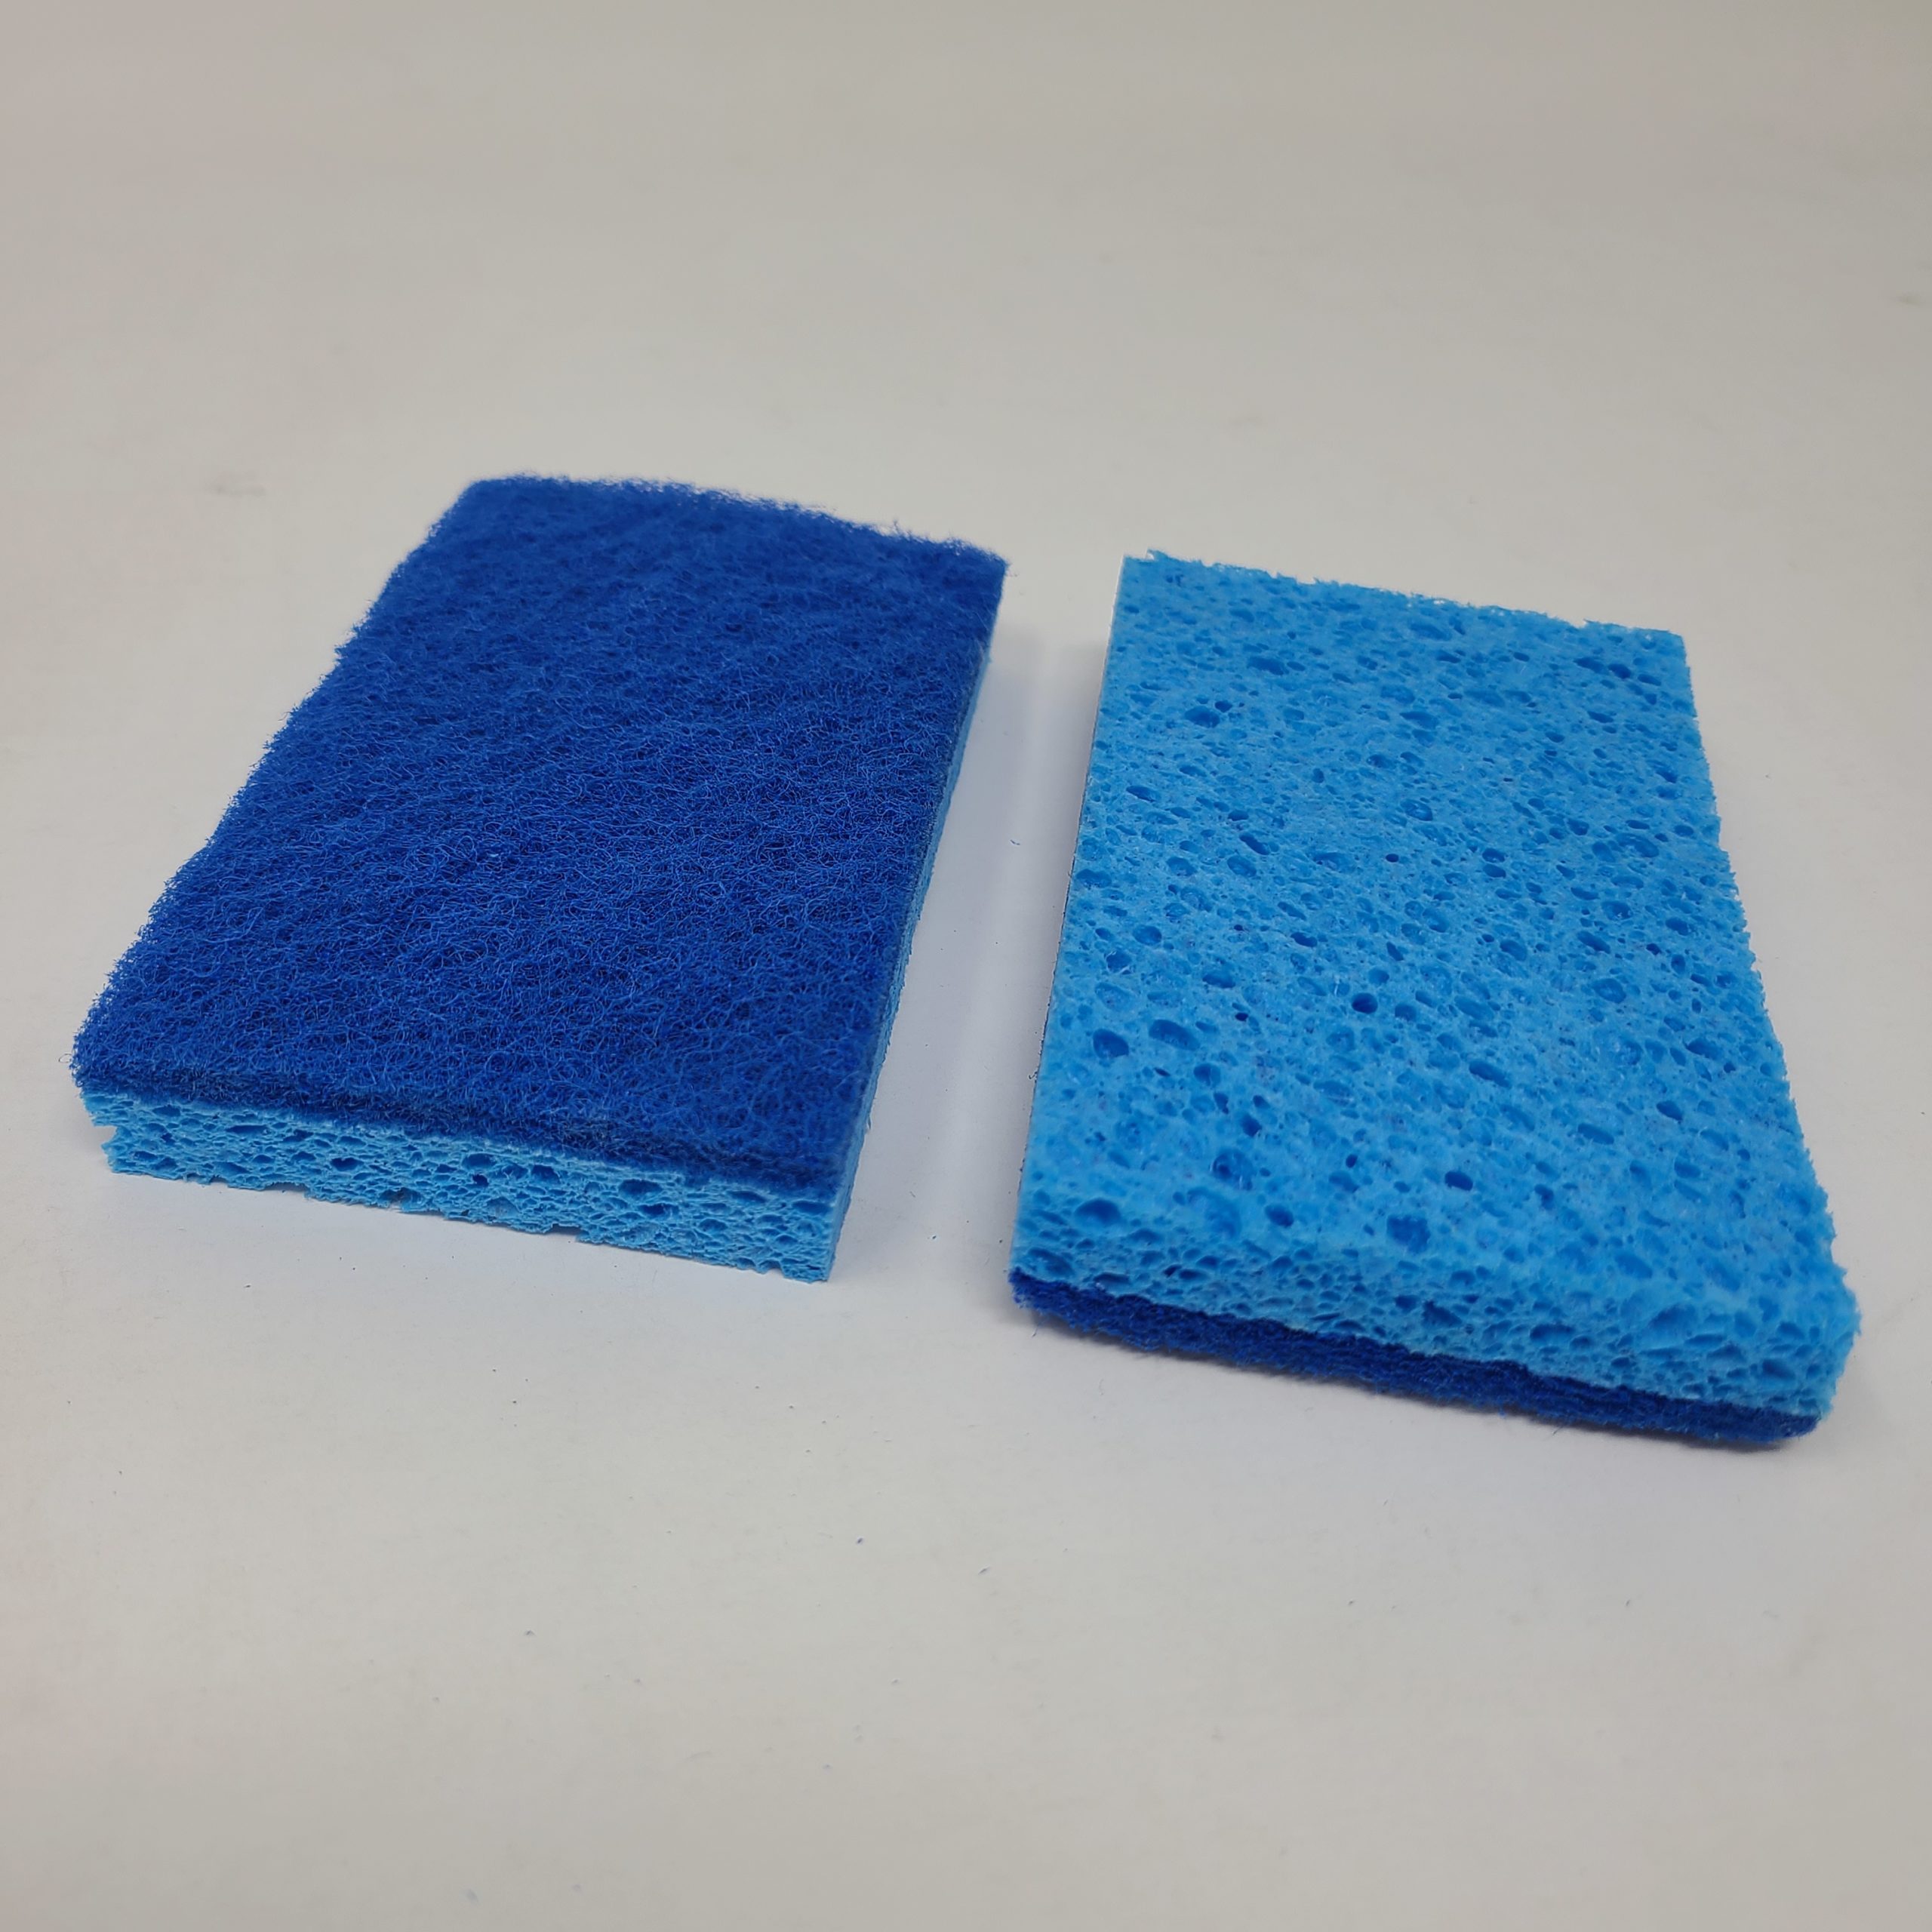 Non-scratch Cellulose Scrub Sponge, Dual-sided Dishwashing Sponge